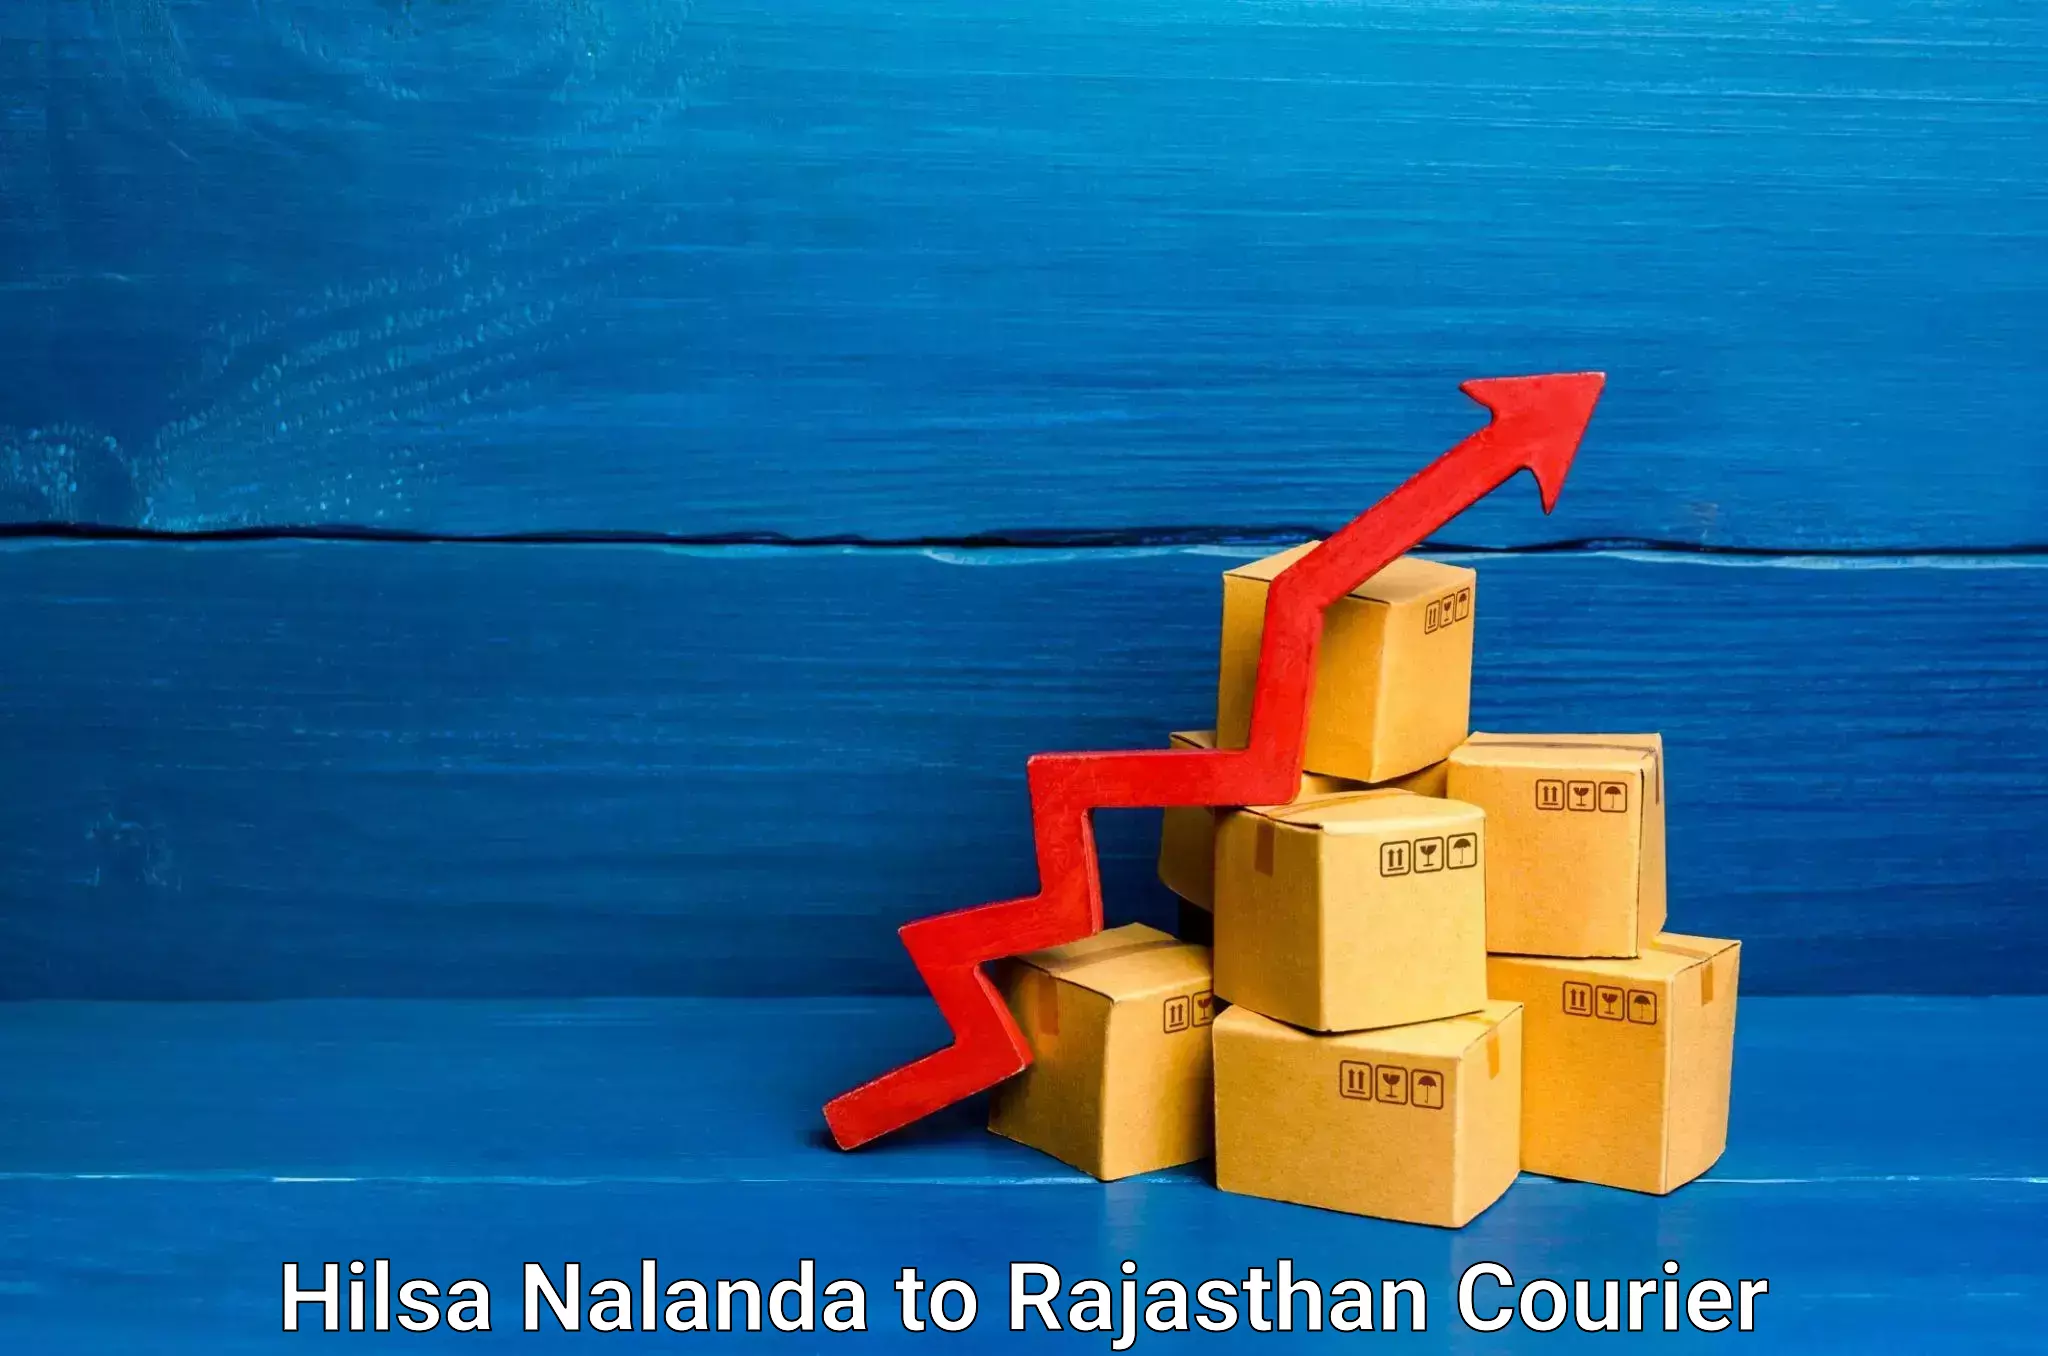 Furniture moving service Hilsa Nalanda to Piparcity